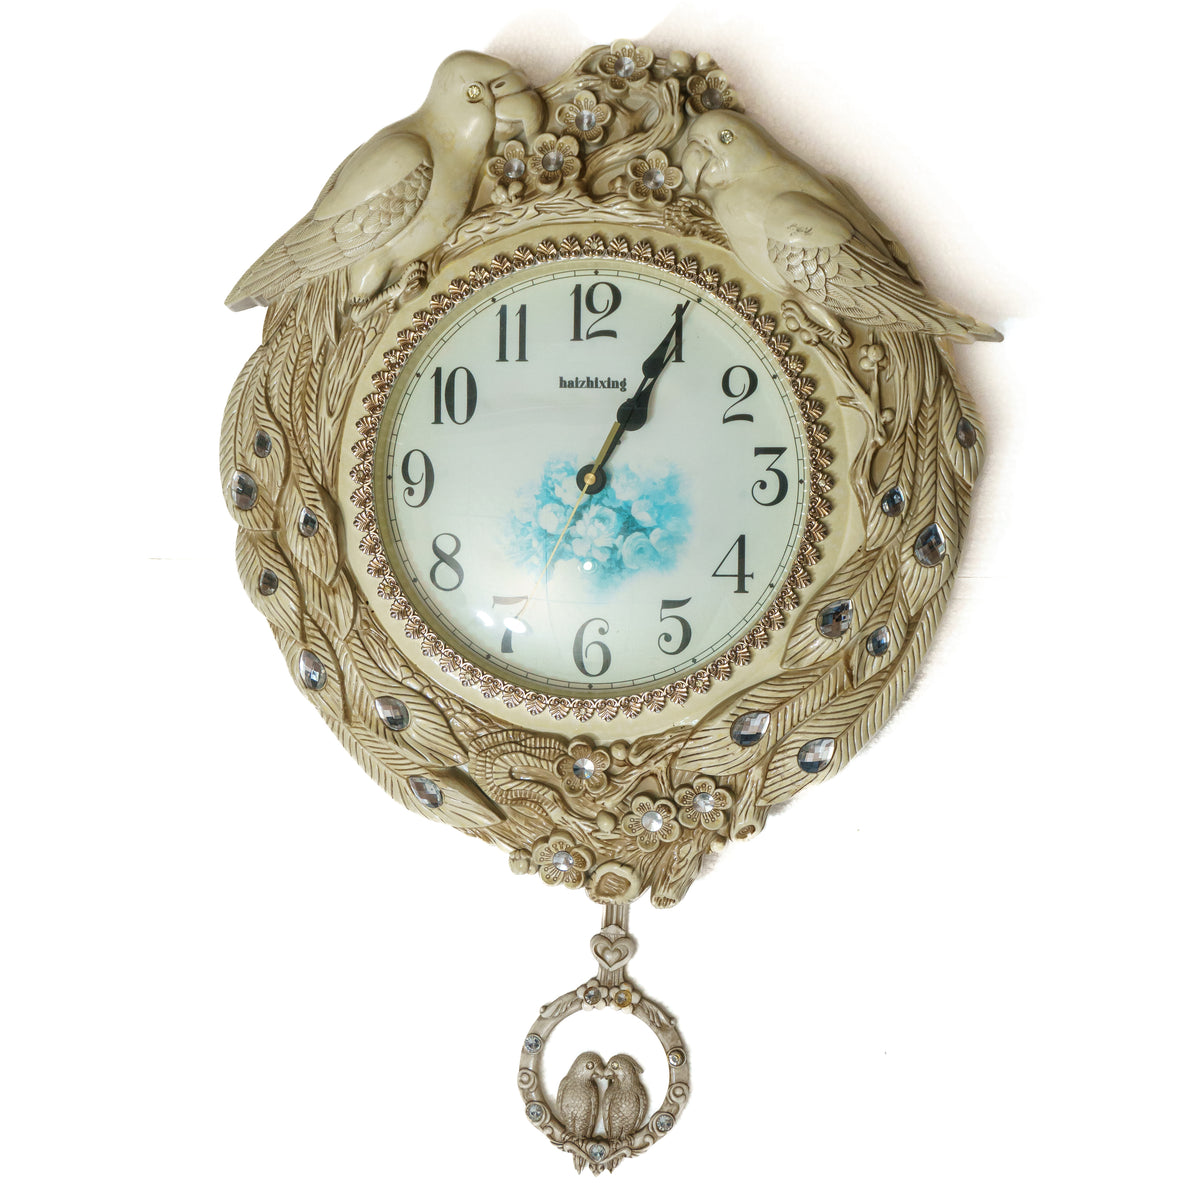 Haizhixing Wall Clock: Pair of Parrots Design, Crystal Beads, Hanging Pendulum